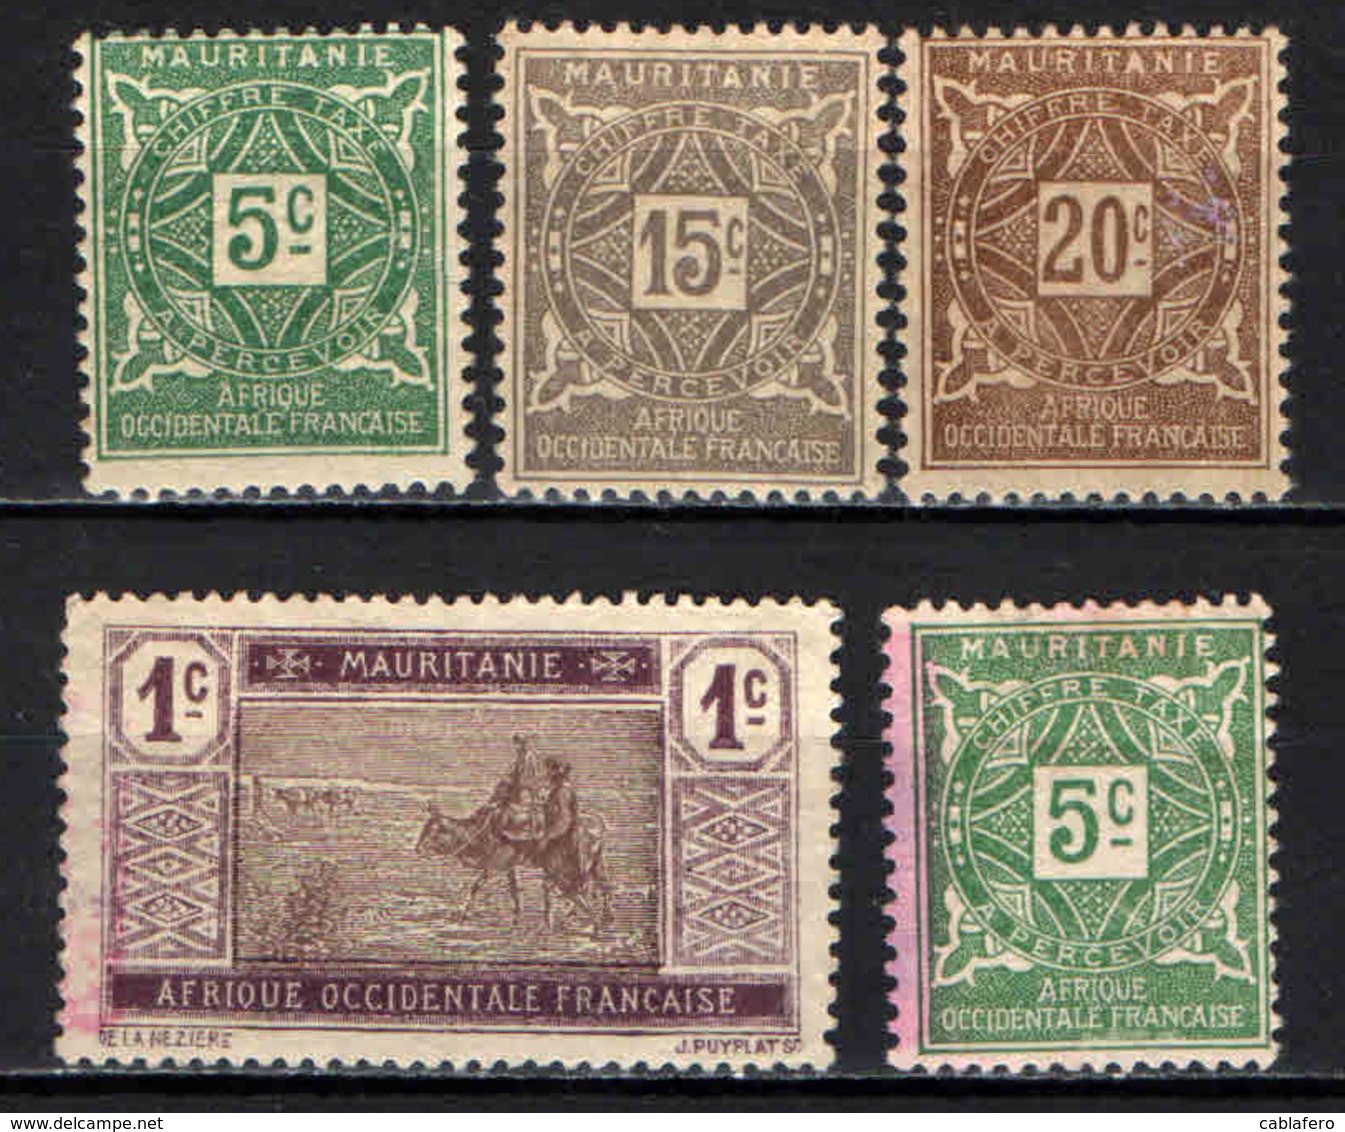 MAURITANIA - LOTTO - USATI - Used Stamps